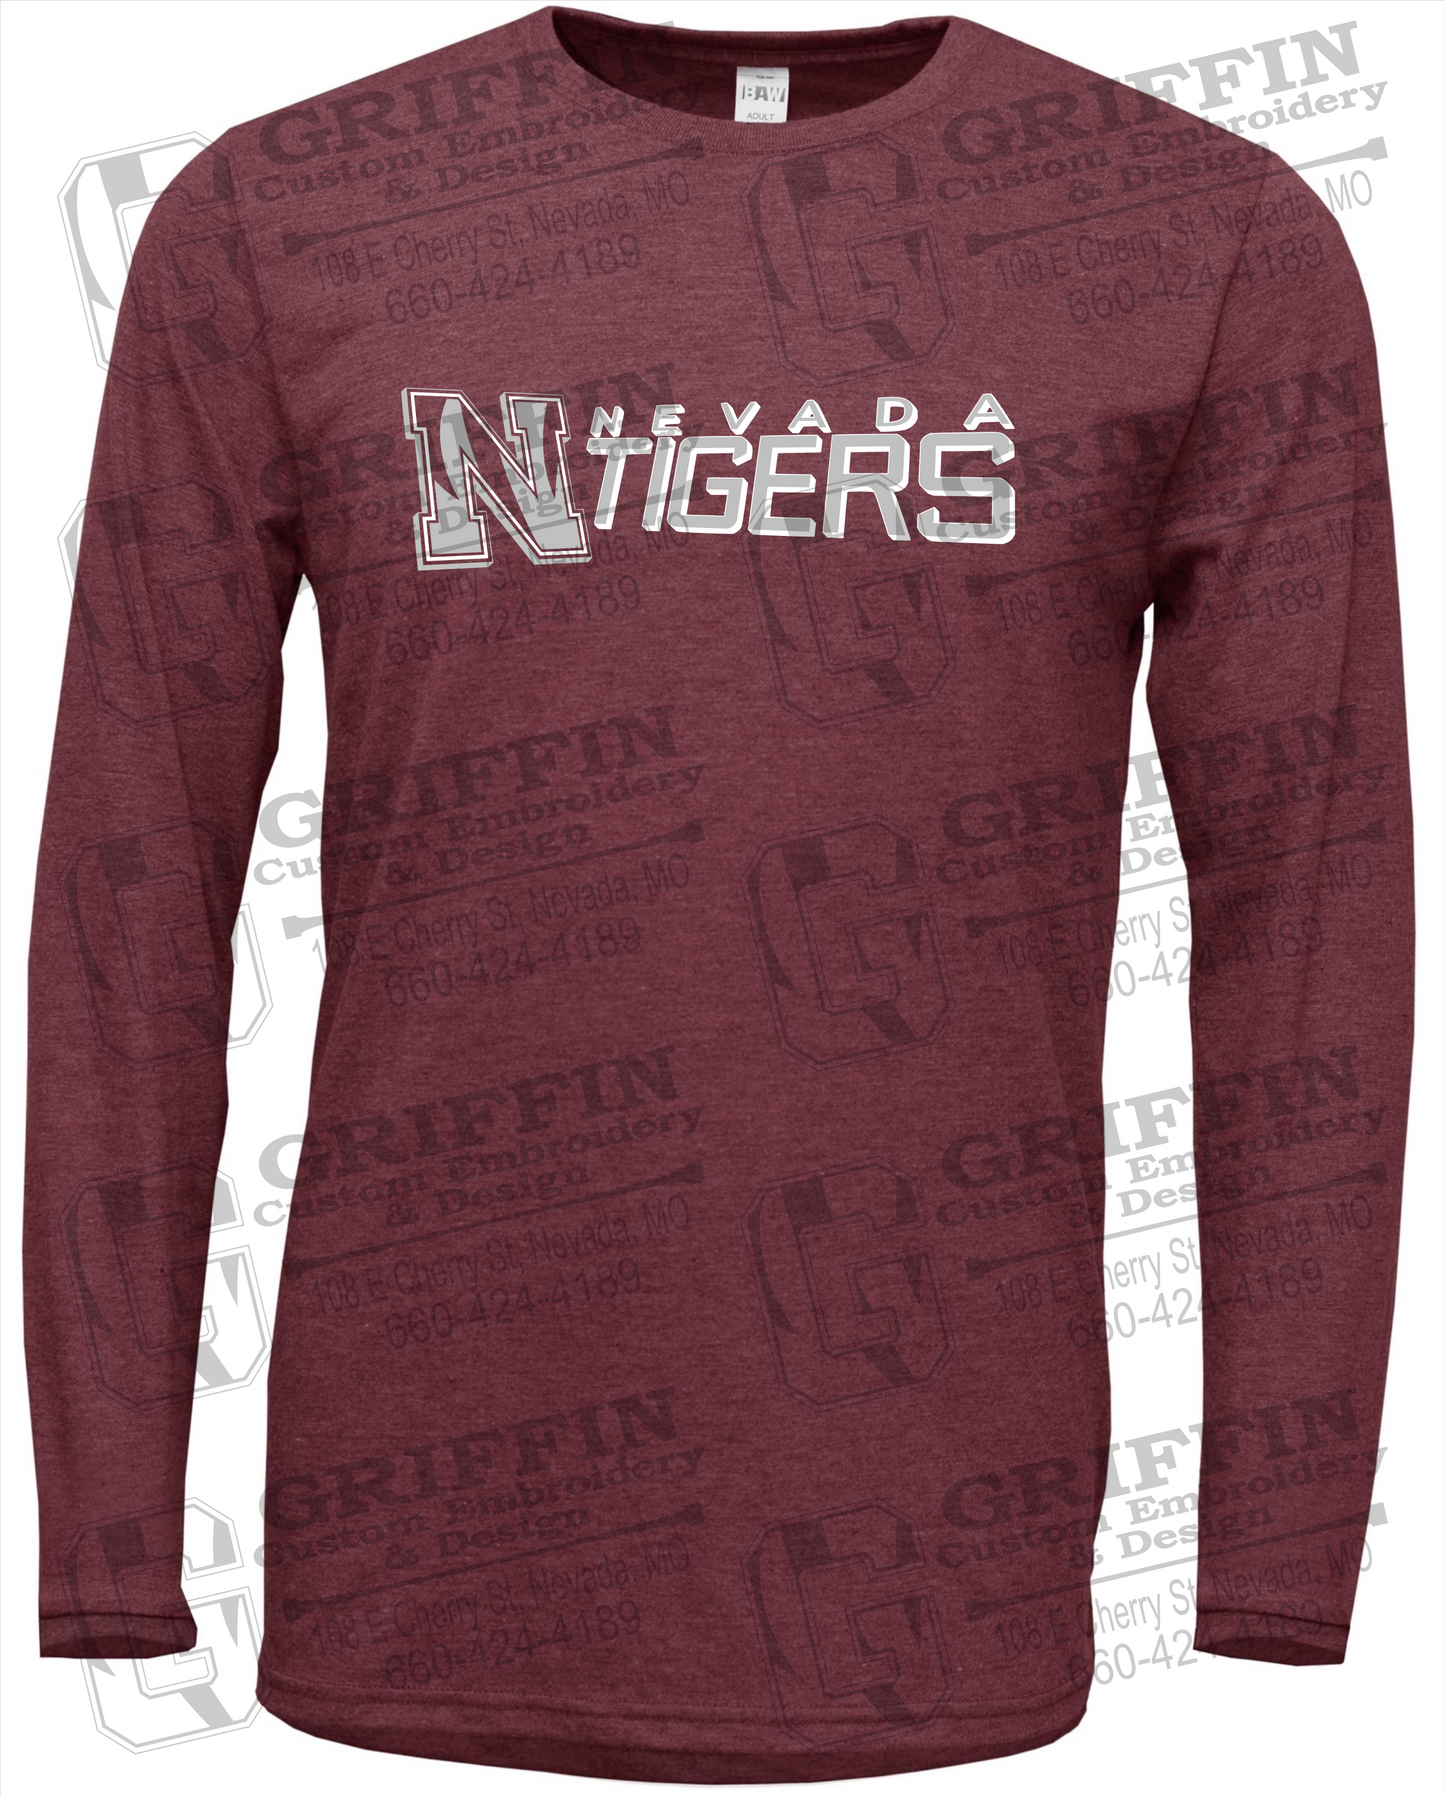 Nevada Tigers 23-N Long Sleeve T-Shirt